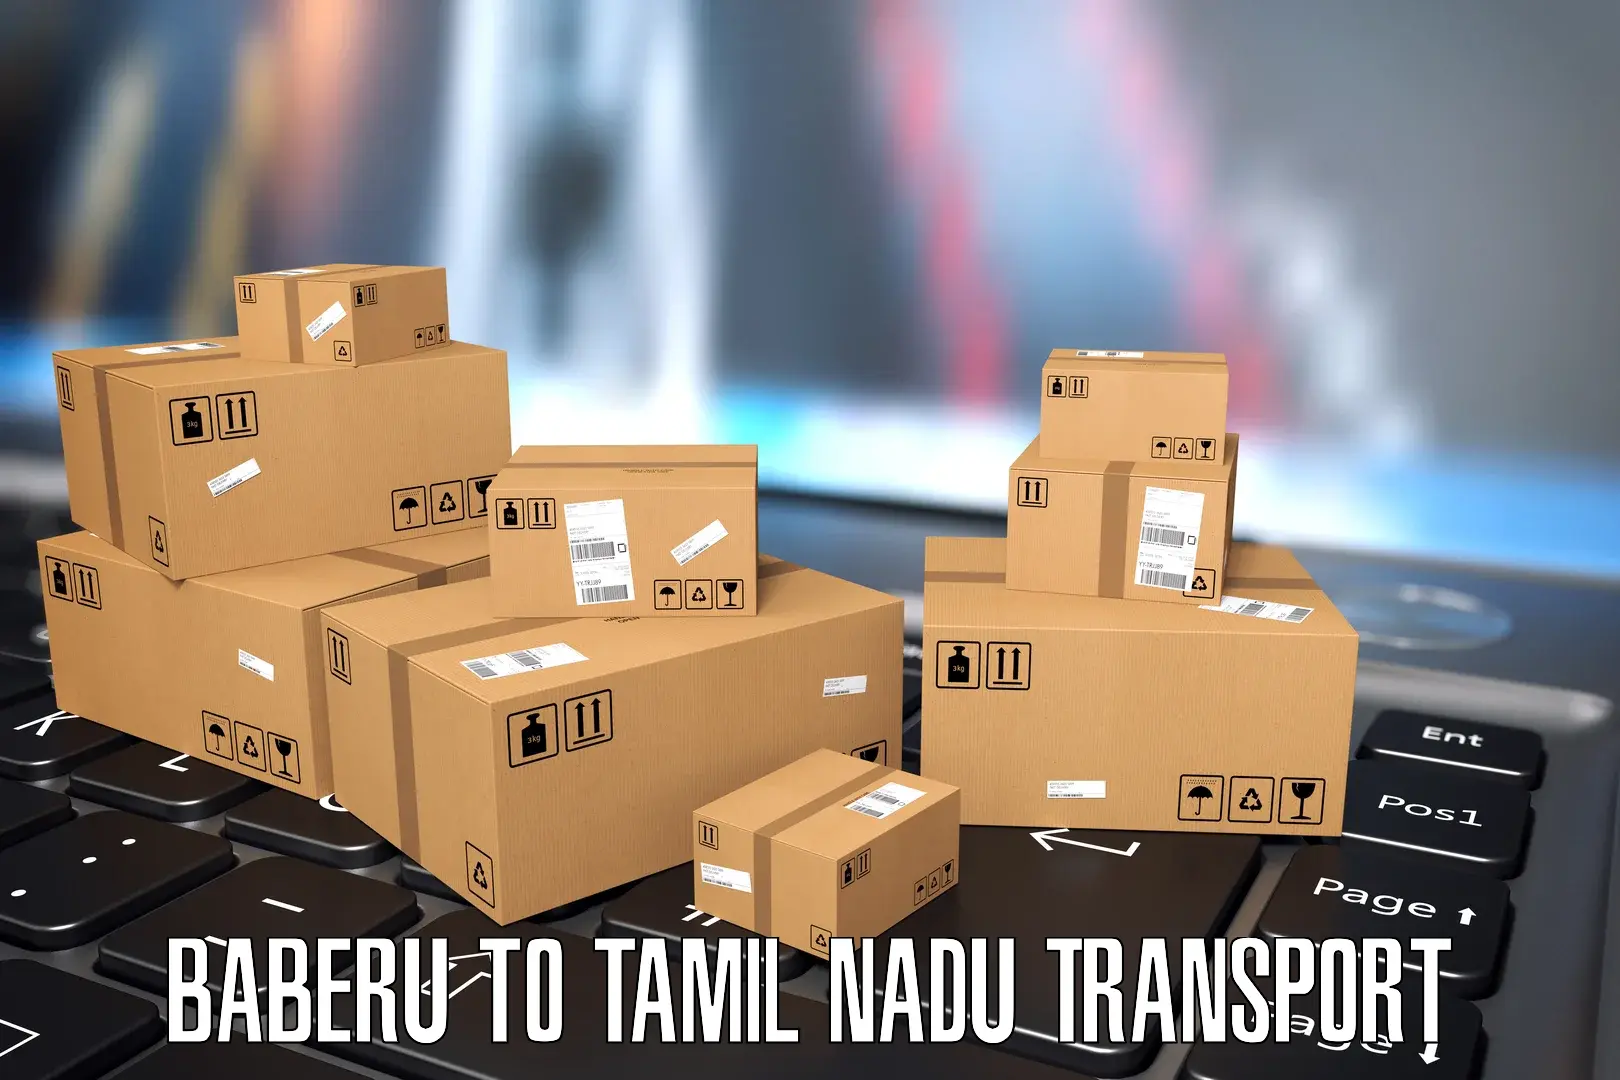 Bike transport service Baberu to Tamil Nadu